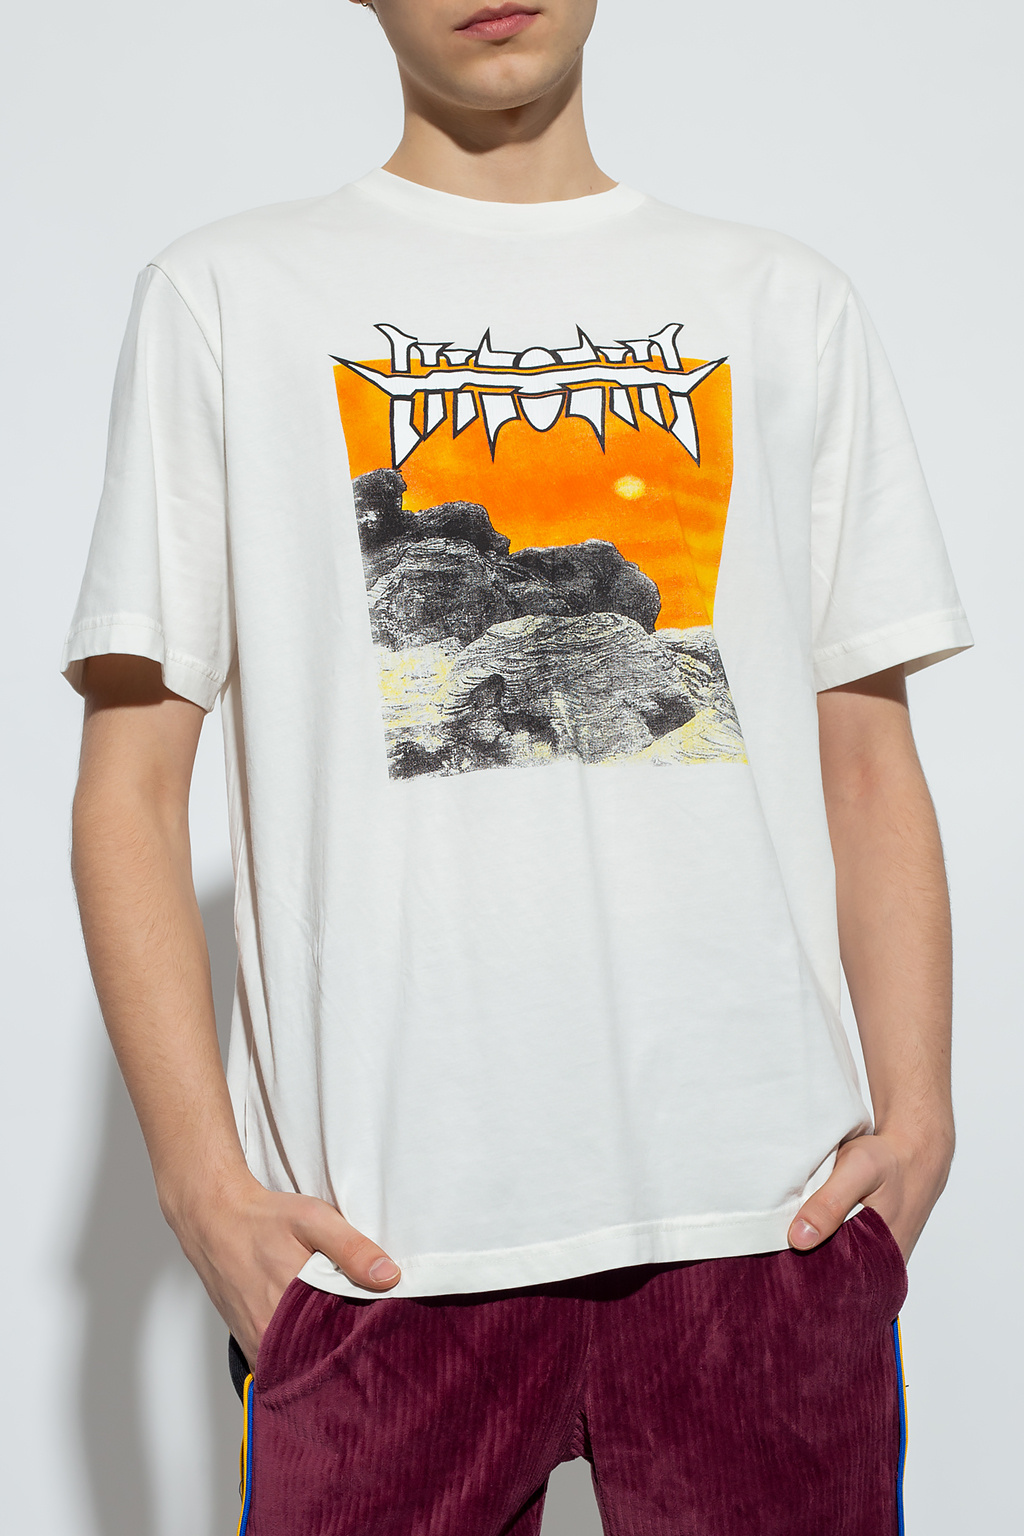 StclaircomoShops | Diesel 'T - Men's Clothing - Just' printed T | shirt -  vsct clubwear 2 on 1 t shirt anthracite melange white